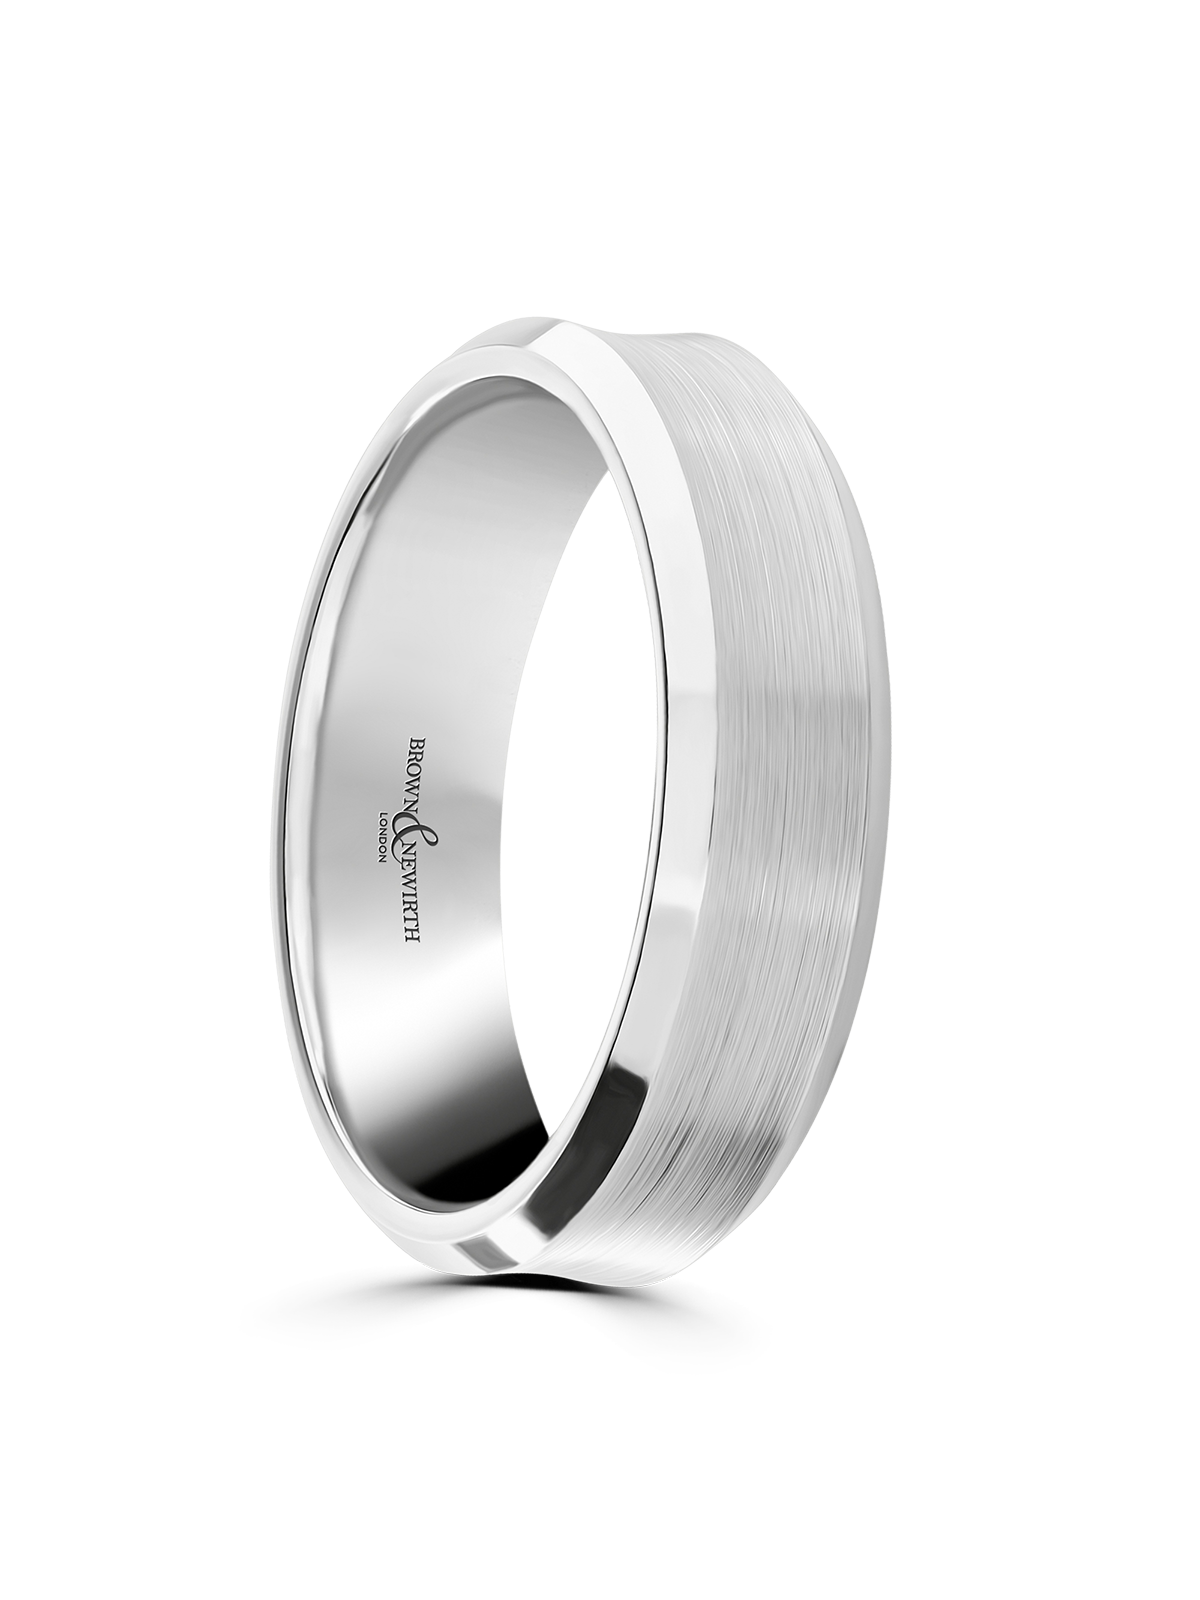 Brown & Newirth Mercury 6mm Patterned Wedding Ring in Platinum